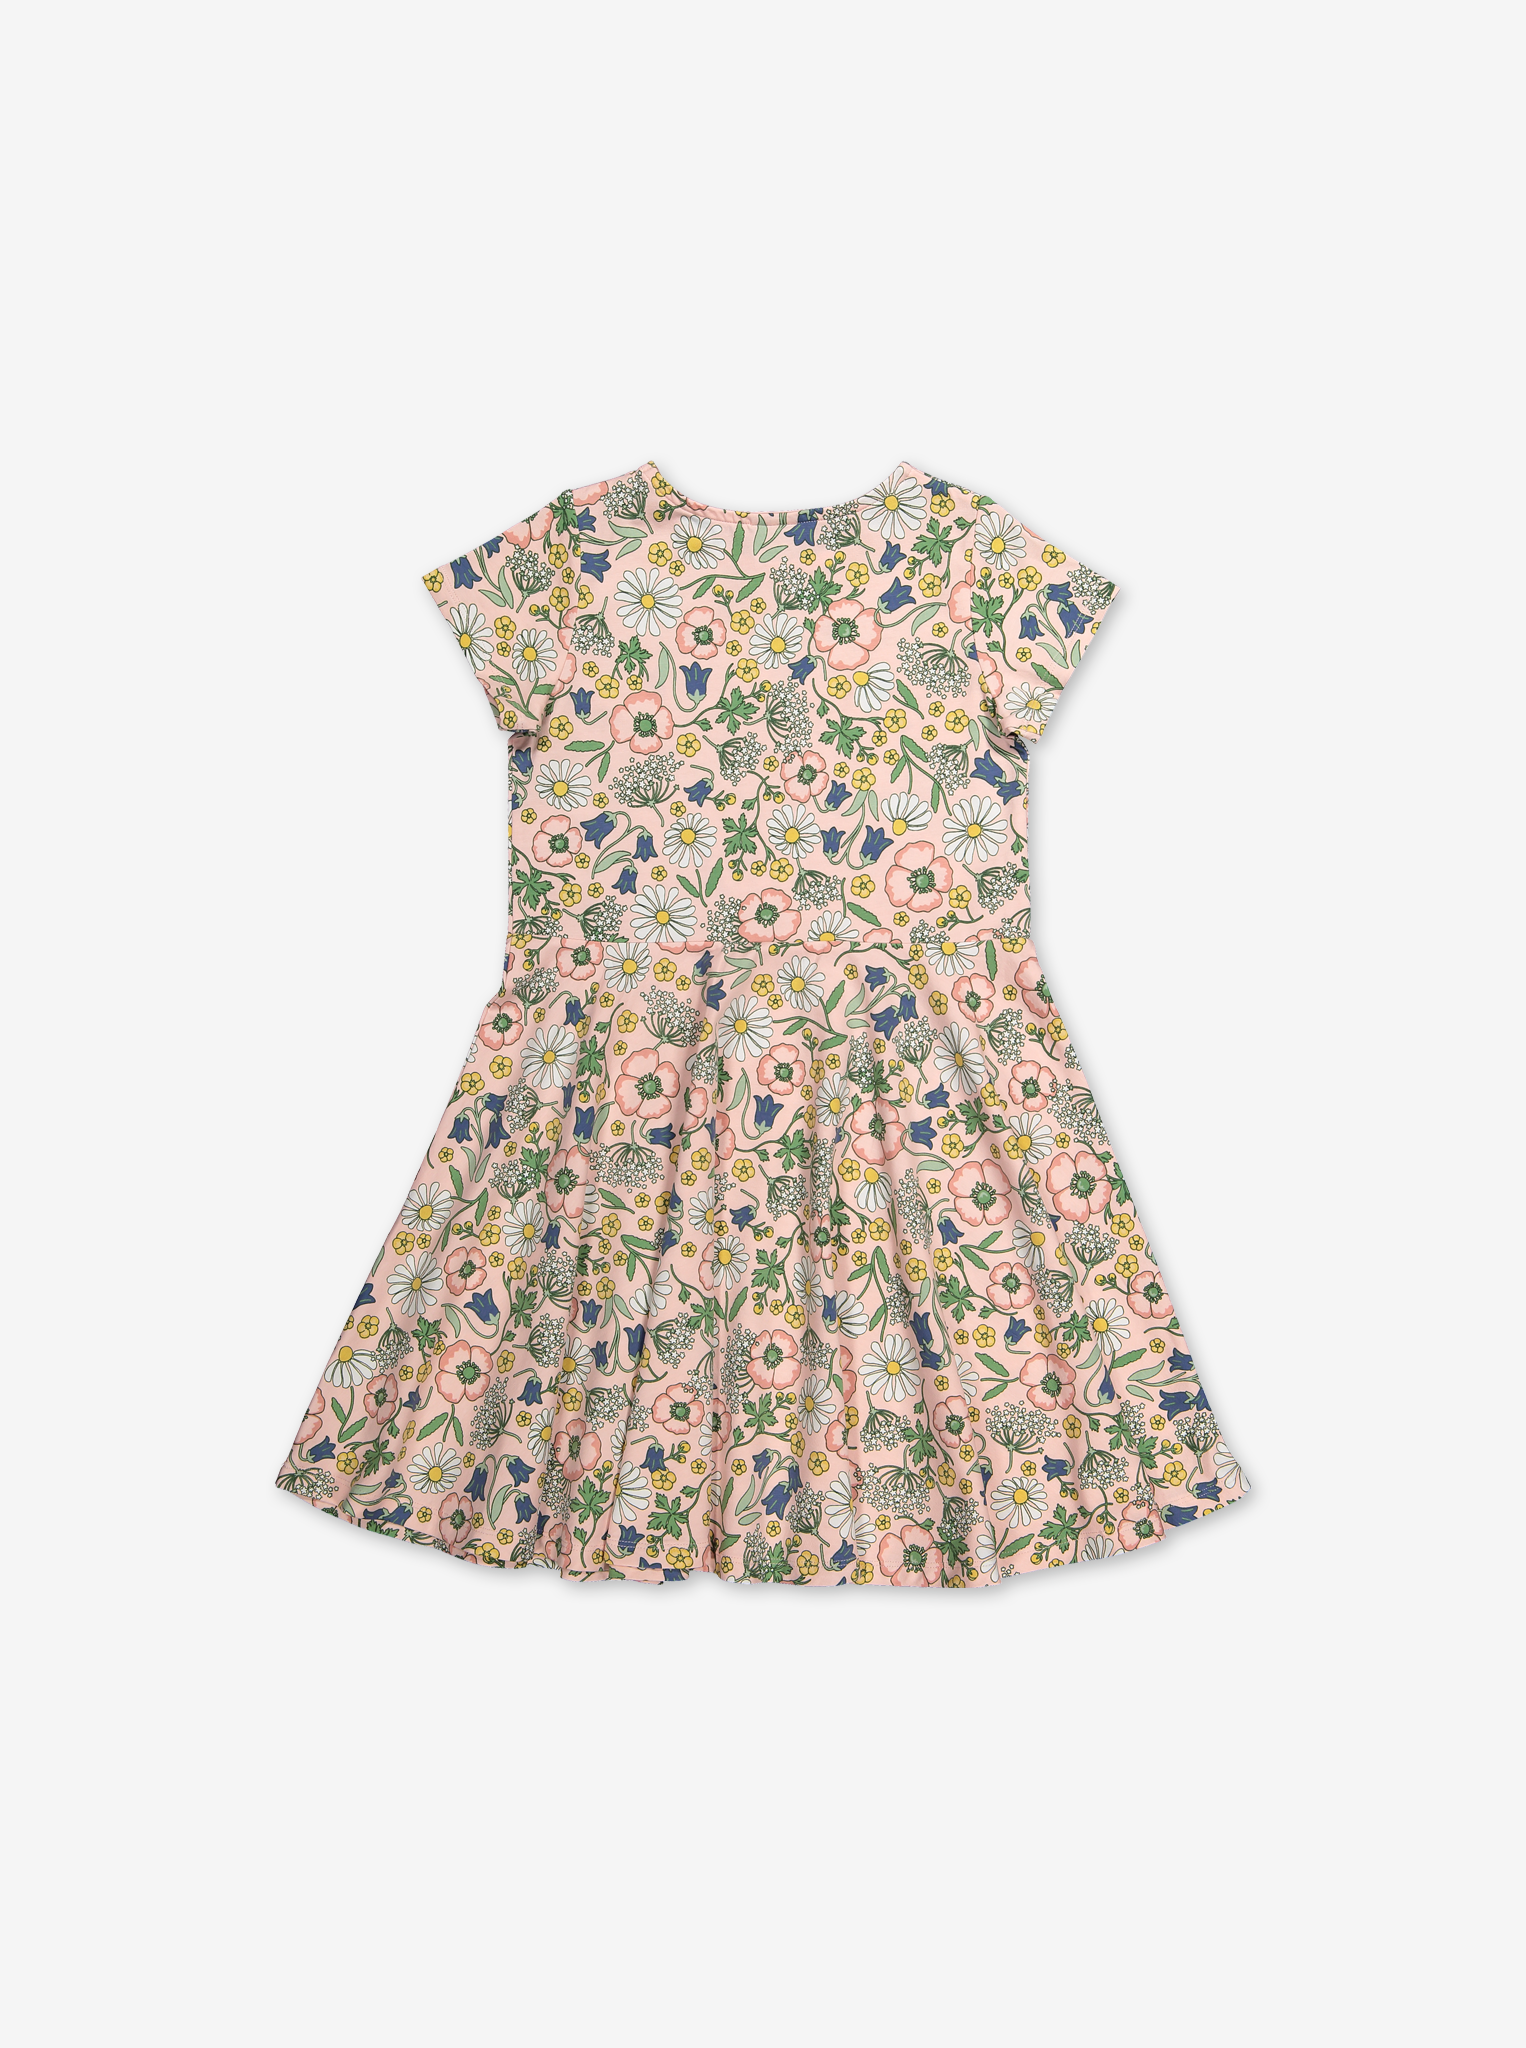 Scandi Floral Kids Dress-Girl-1-6y-Pink